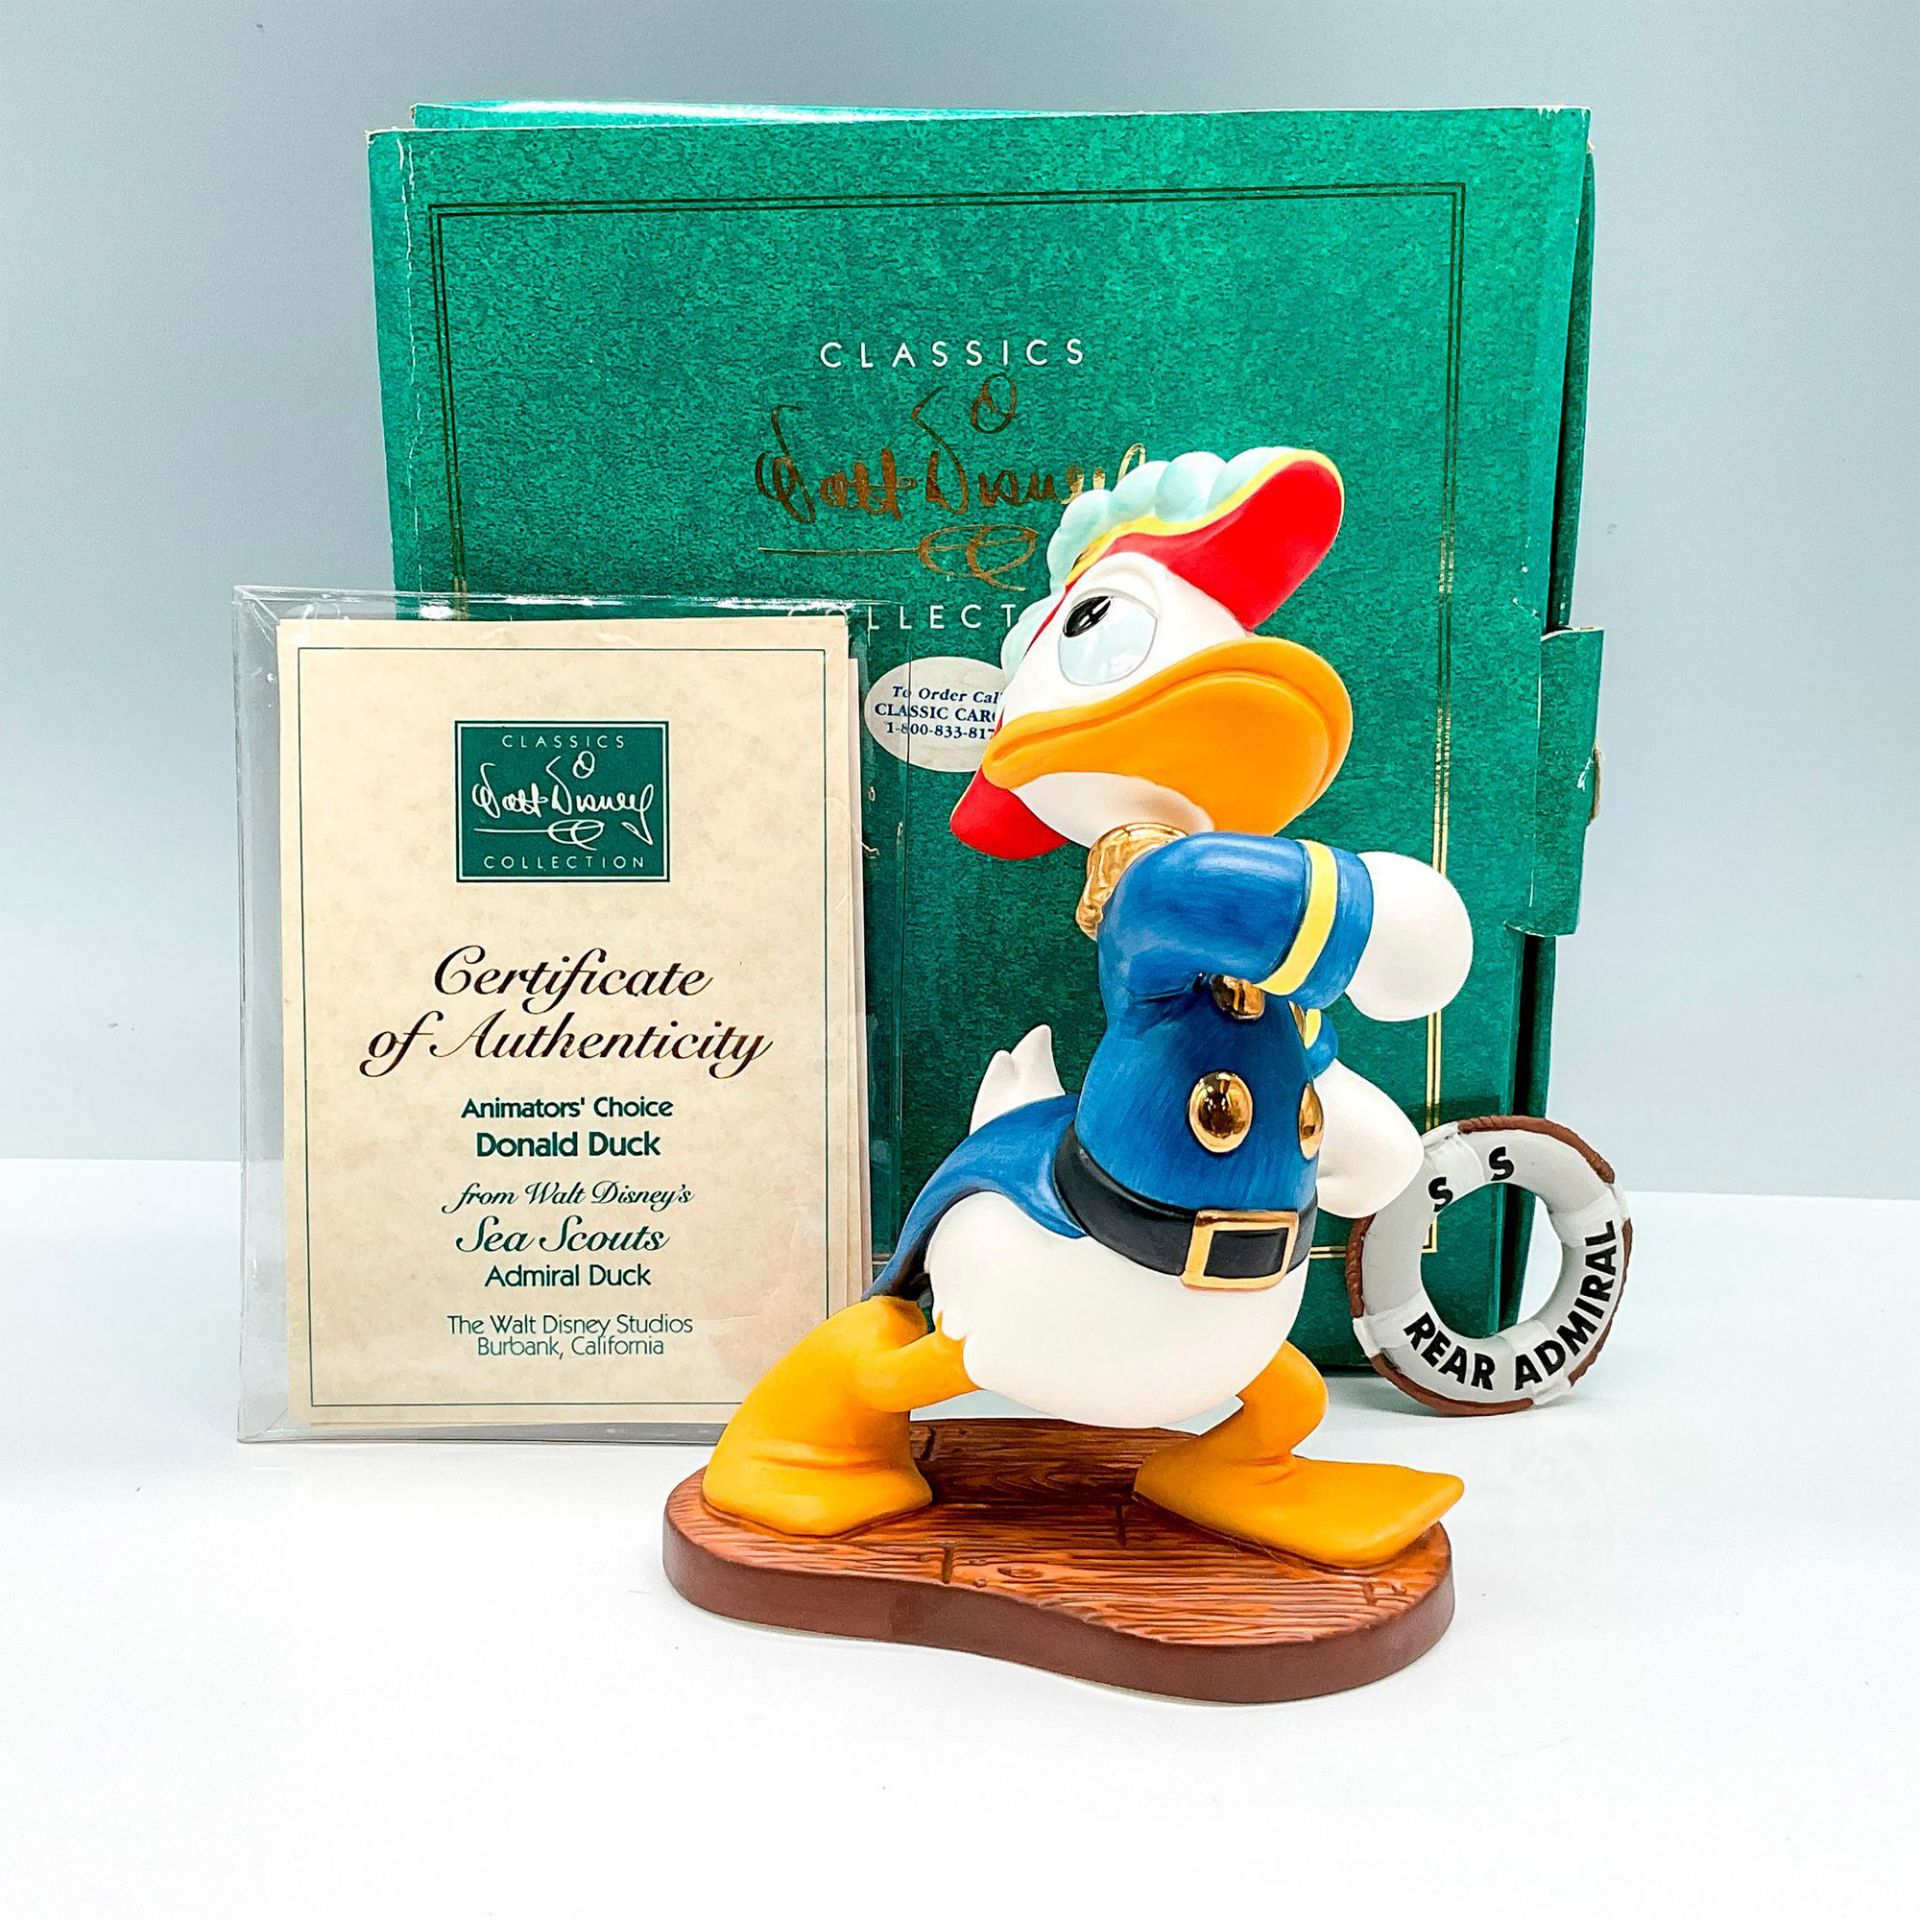 Walt Disney Classic Collection Figurine Donald Duck - Image 4 of 4